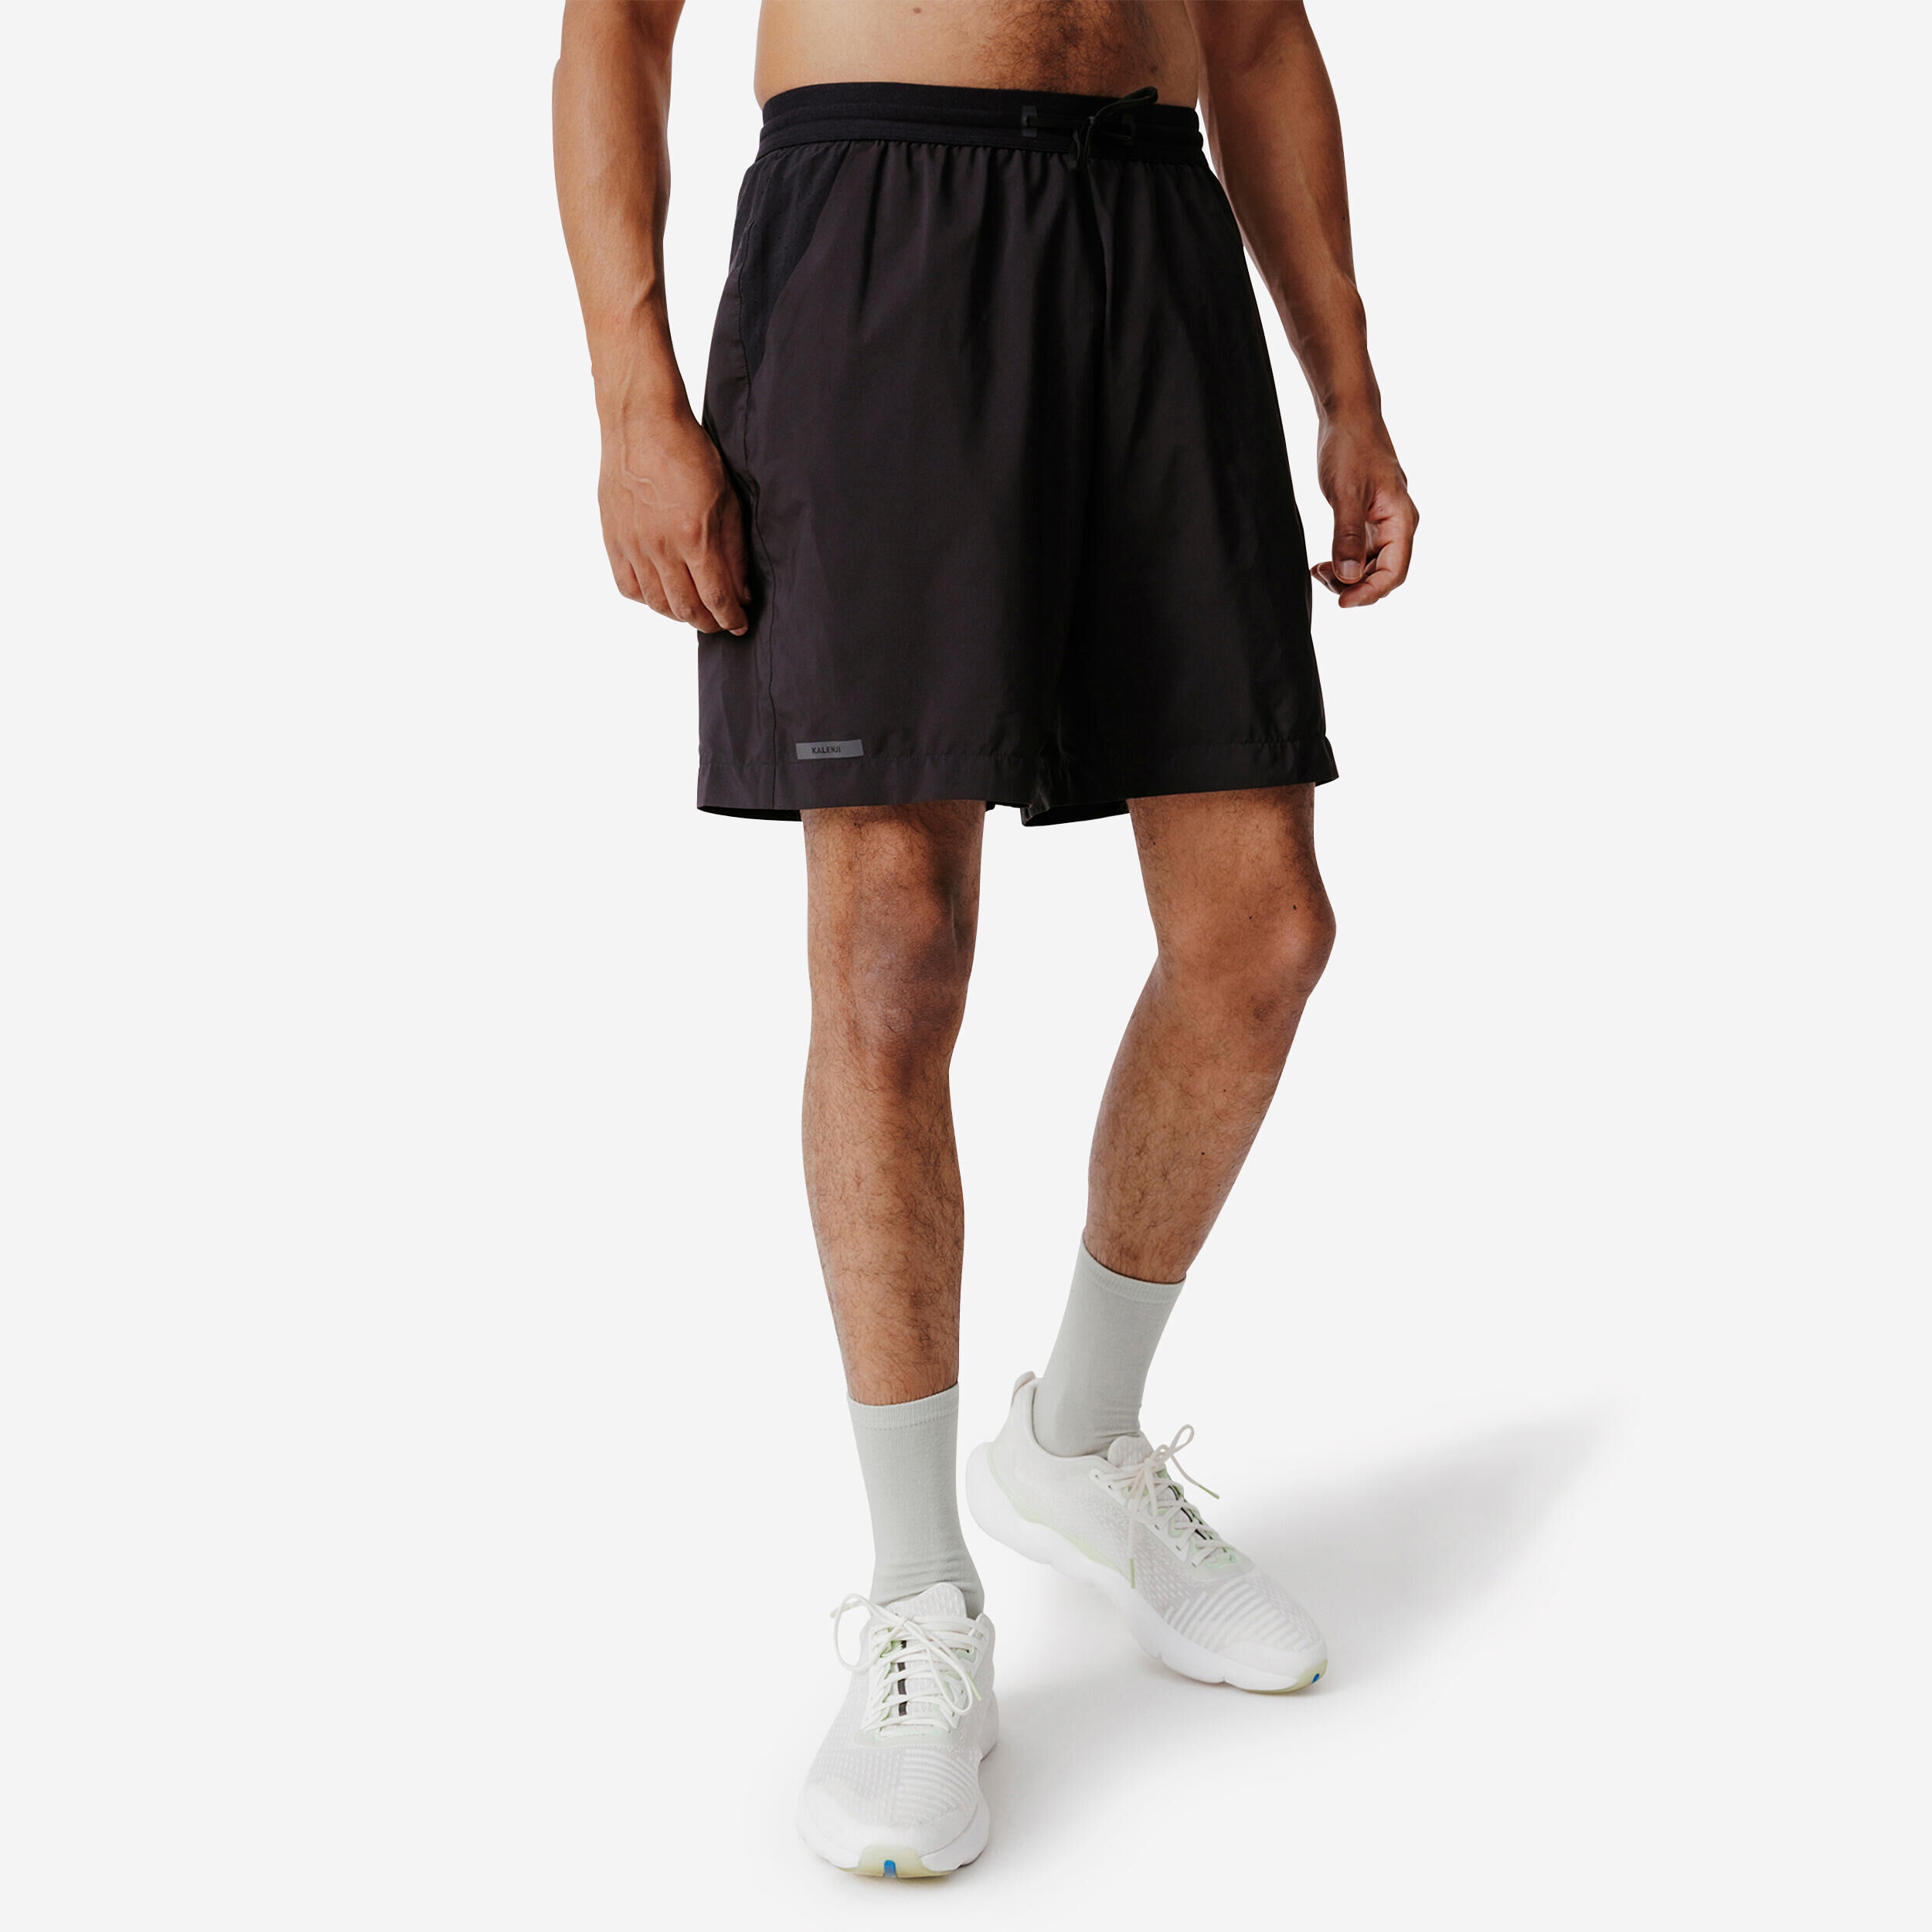 KALENJI Dry 550 Men's Breathable 2-in-1 Running Shorts - black